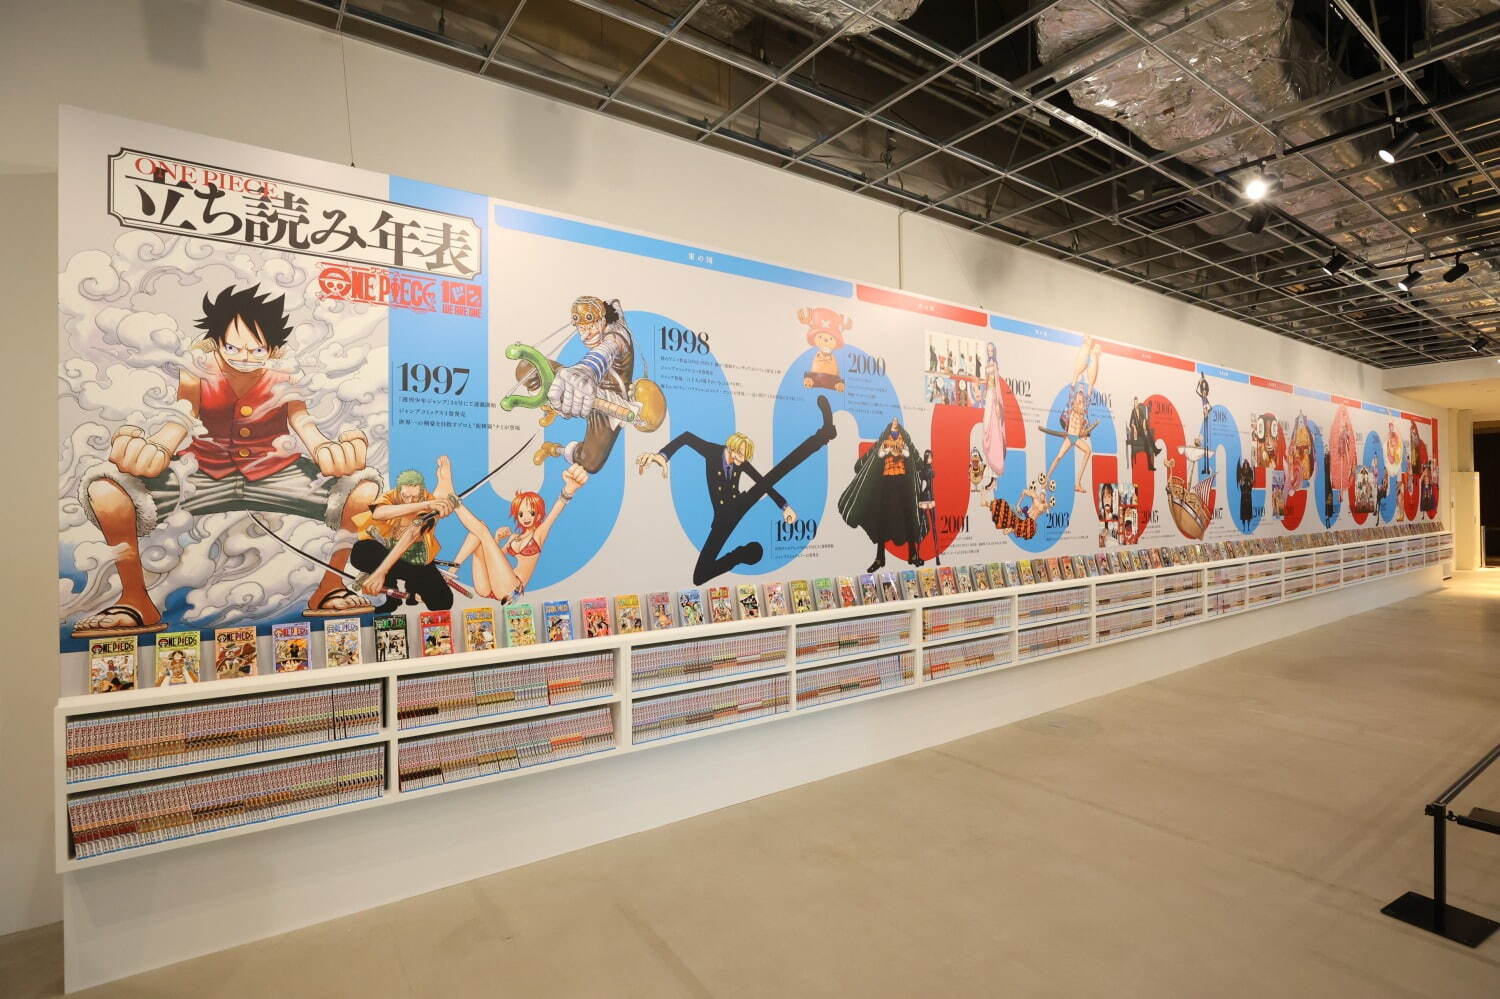 One Piece 100巻記念 巨大展示 超巨 大海賊百景 100巻立ち読み図書館 竹芝で ファッションプレス